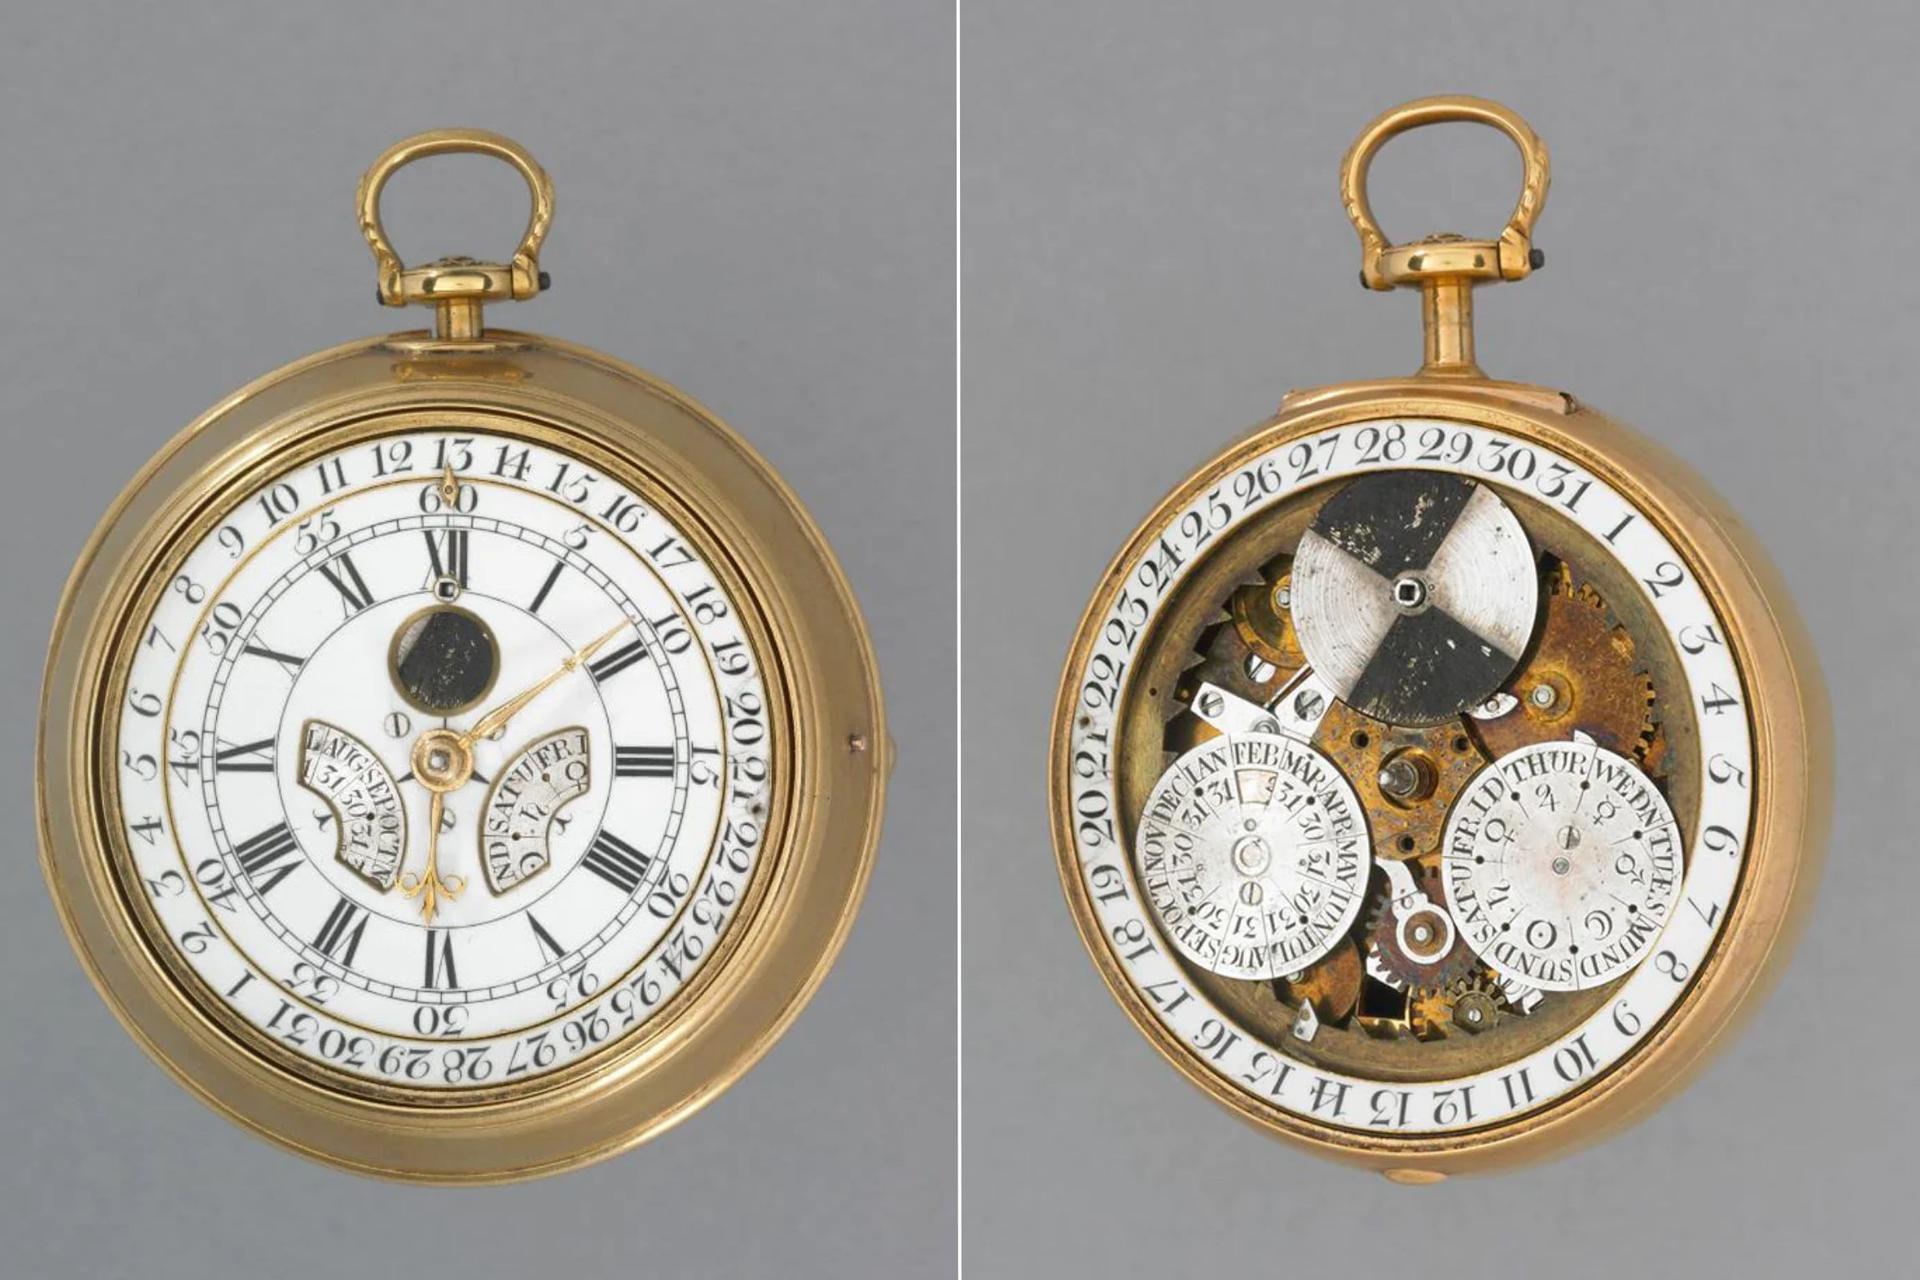 Thomas Mudge's cylinder watch with perpetual calendar, circa 1772